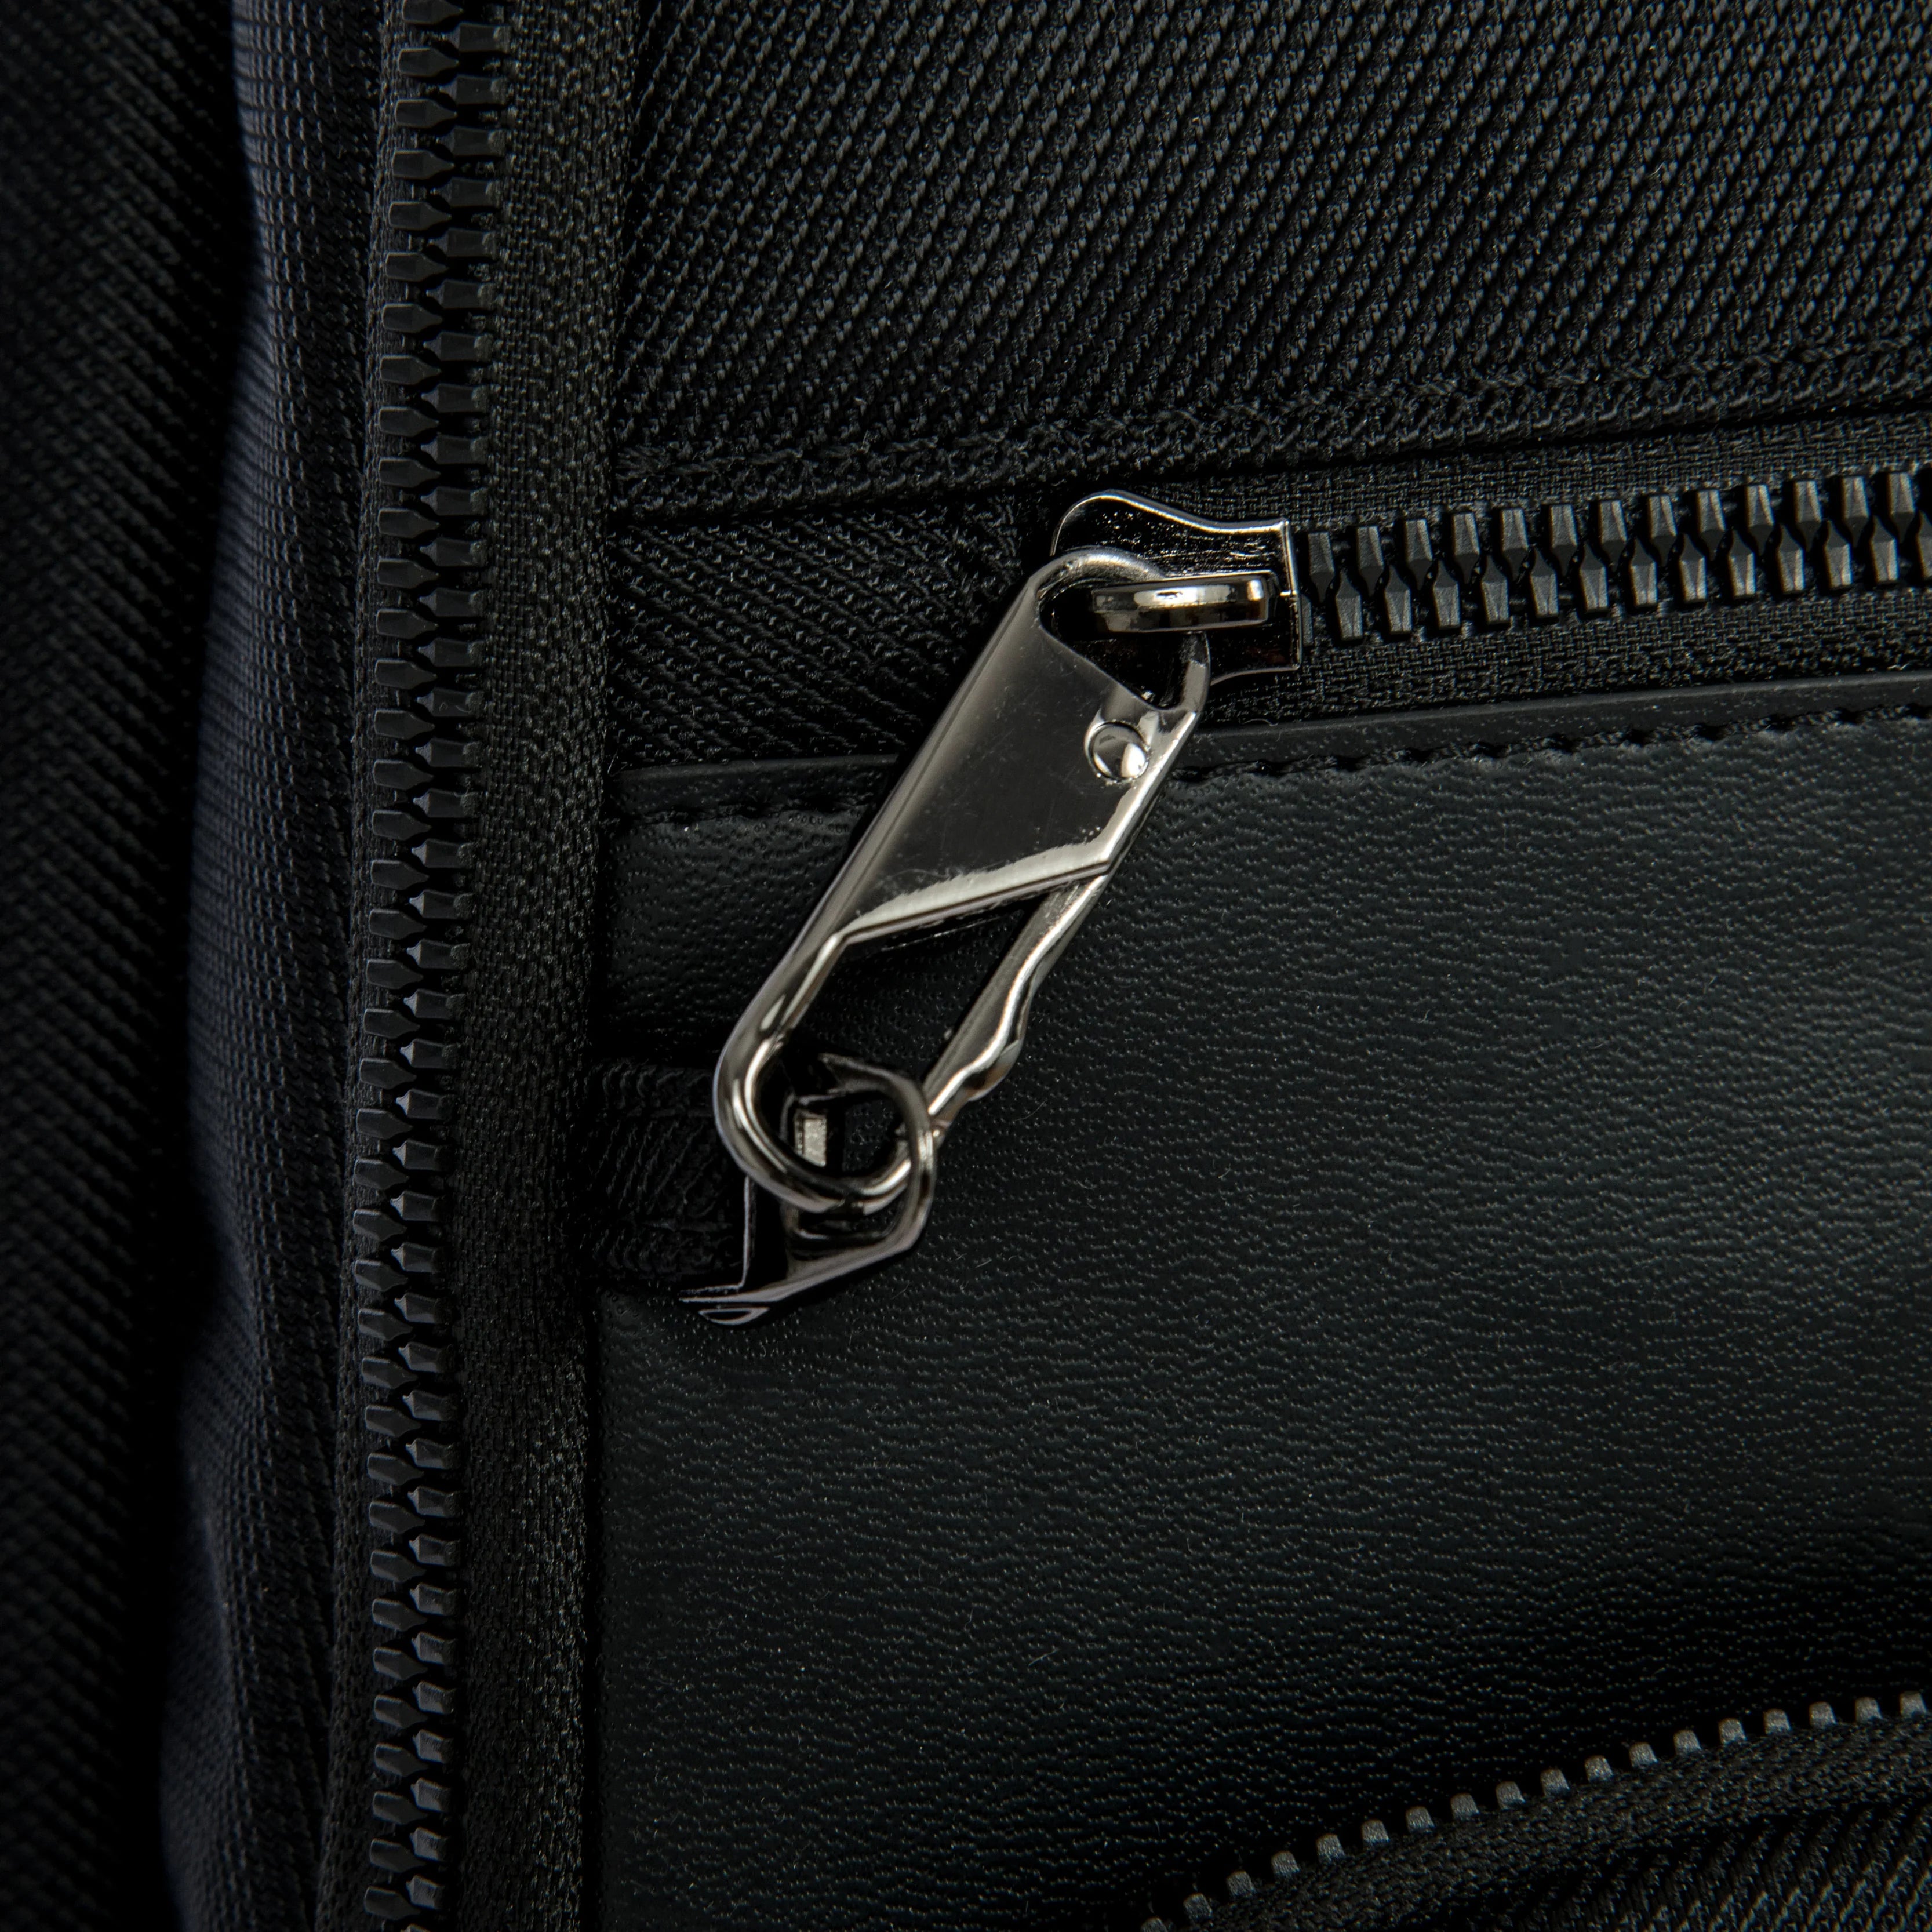 Brics Matera Backpack XS 38 cm - Black